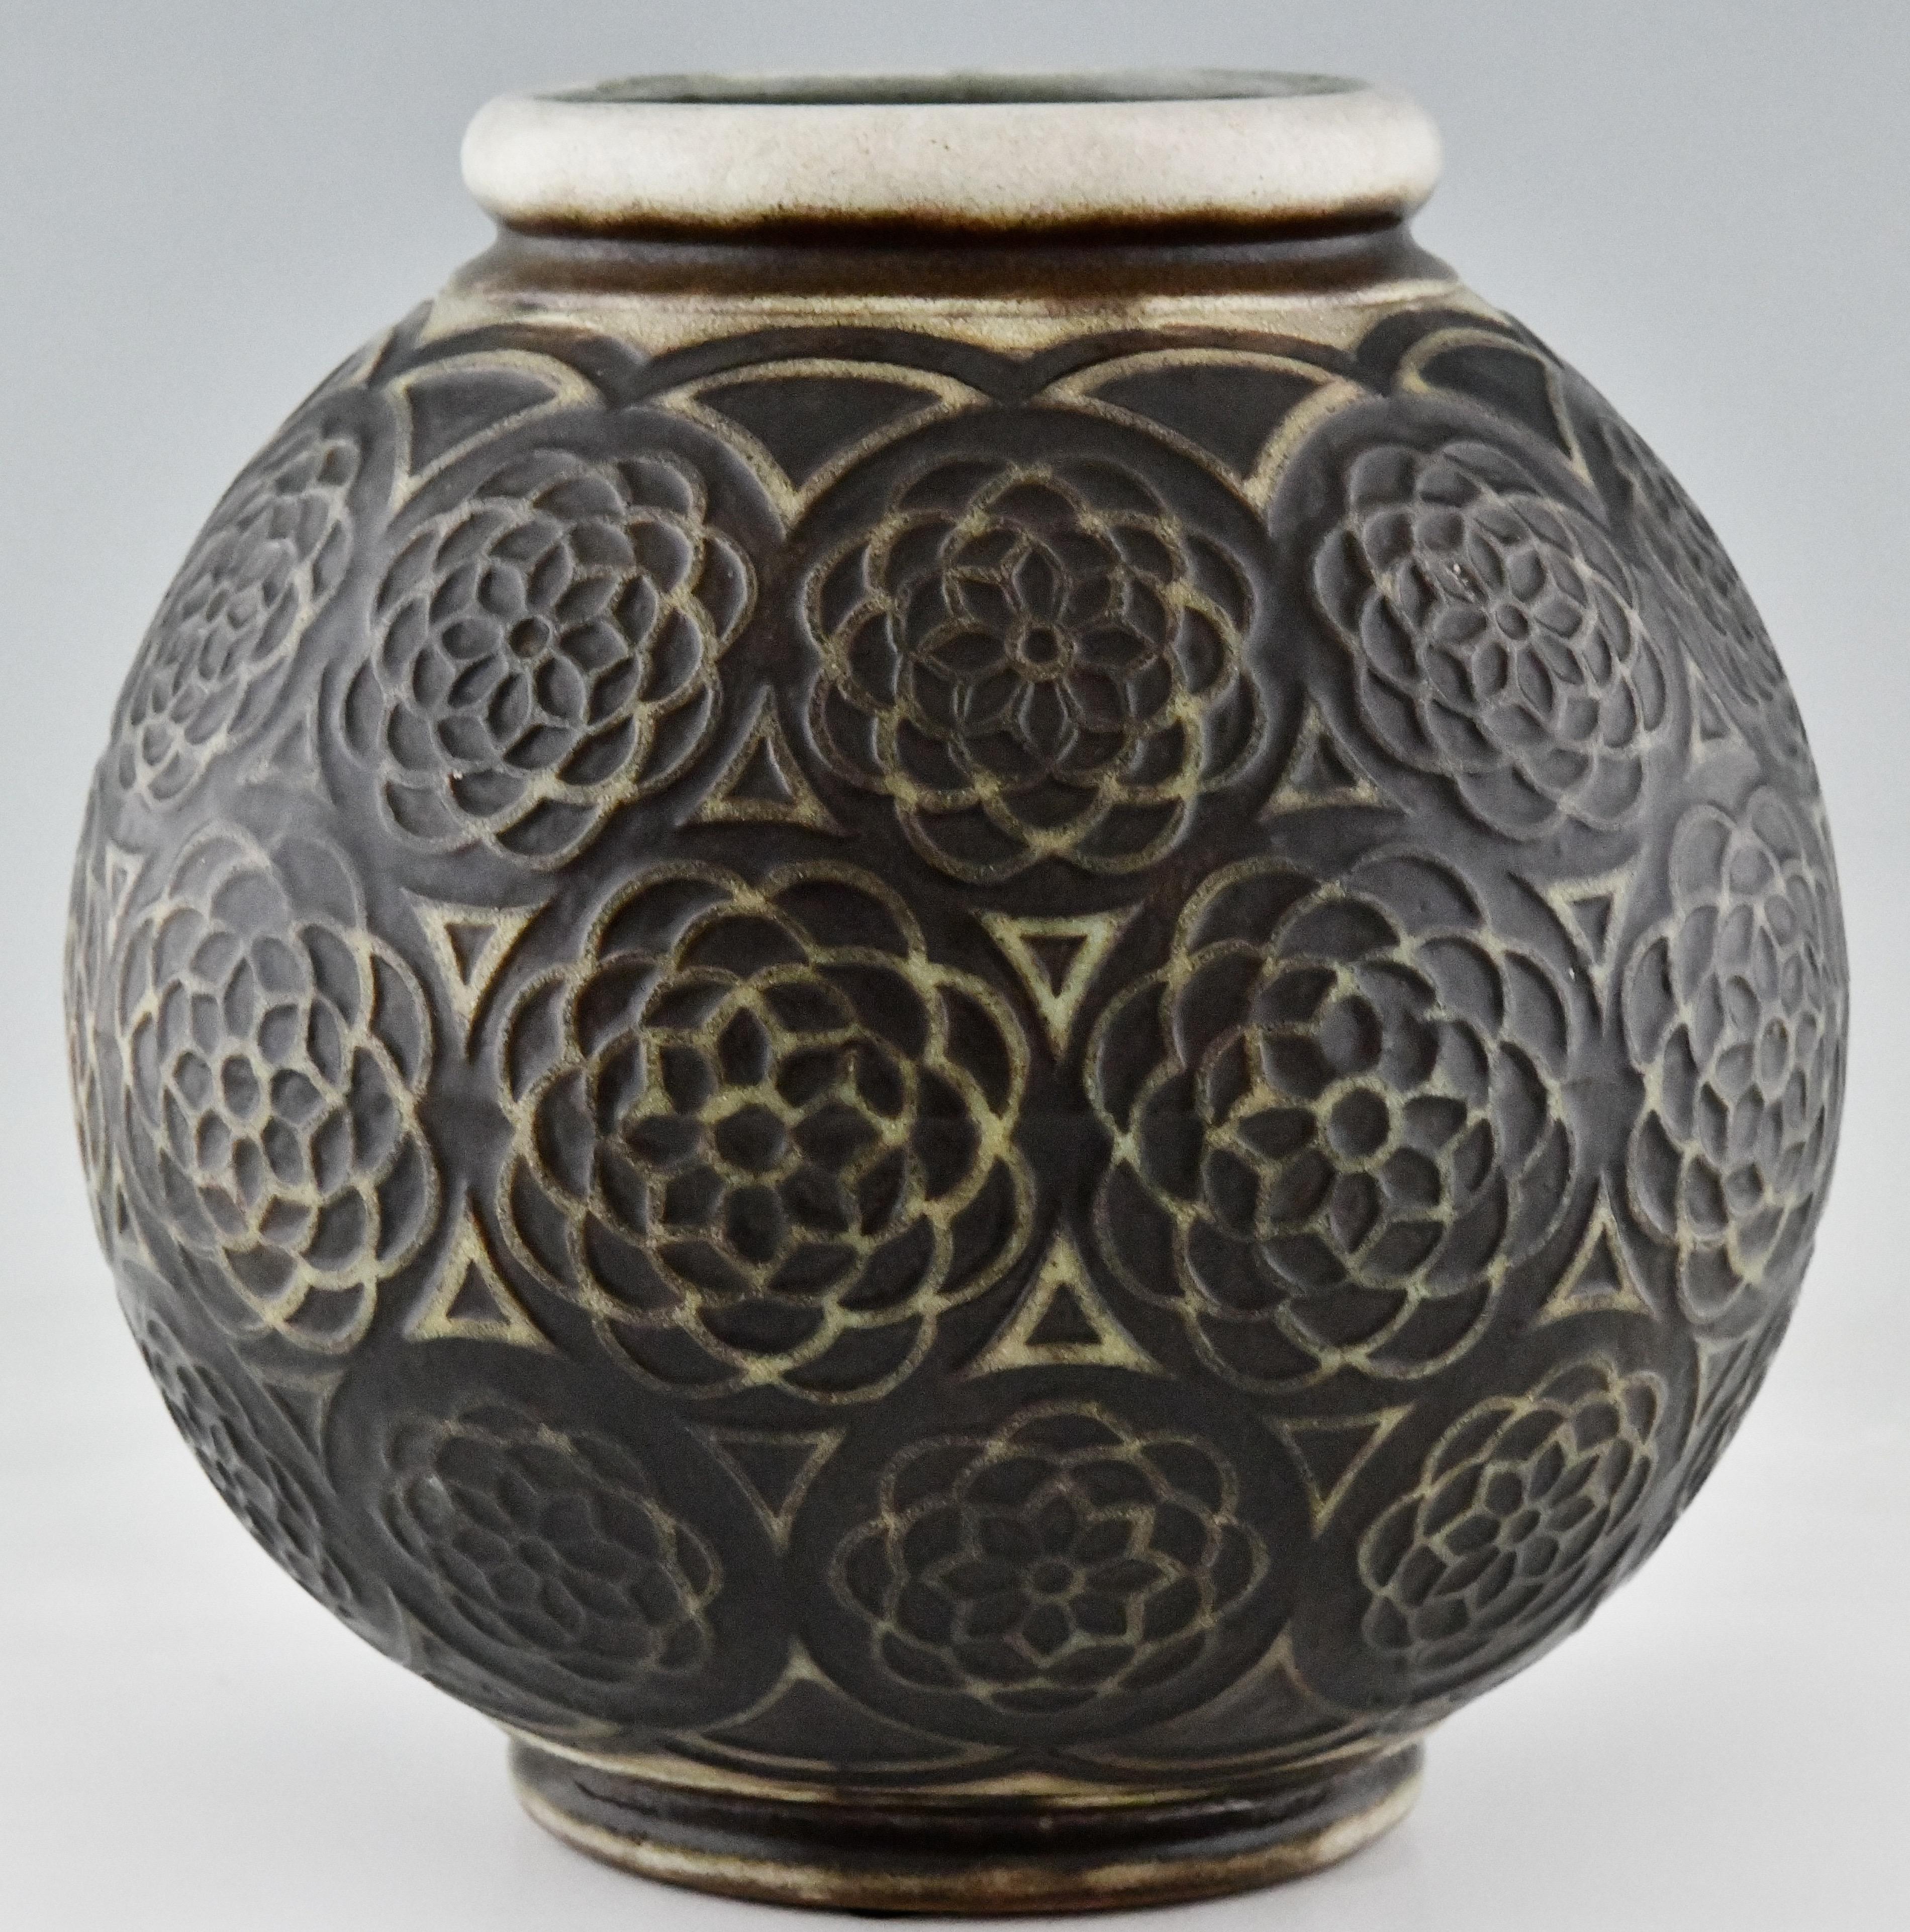 French Art Deco Spherical Ceramic Vase with Stylized Motifs by Joseph Mougin Nancy 1925